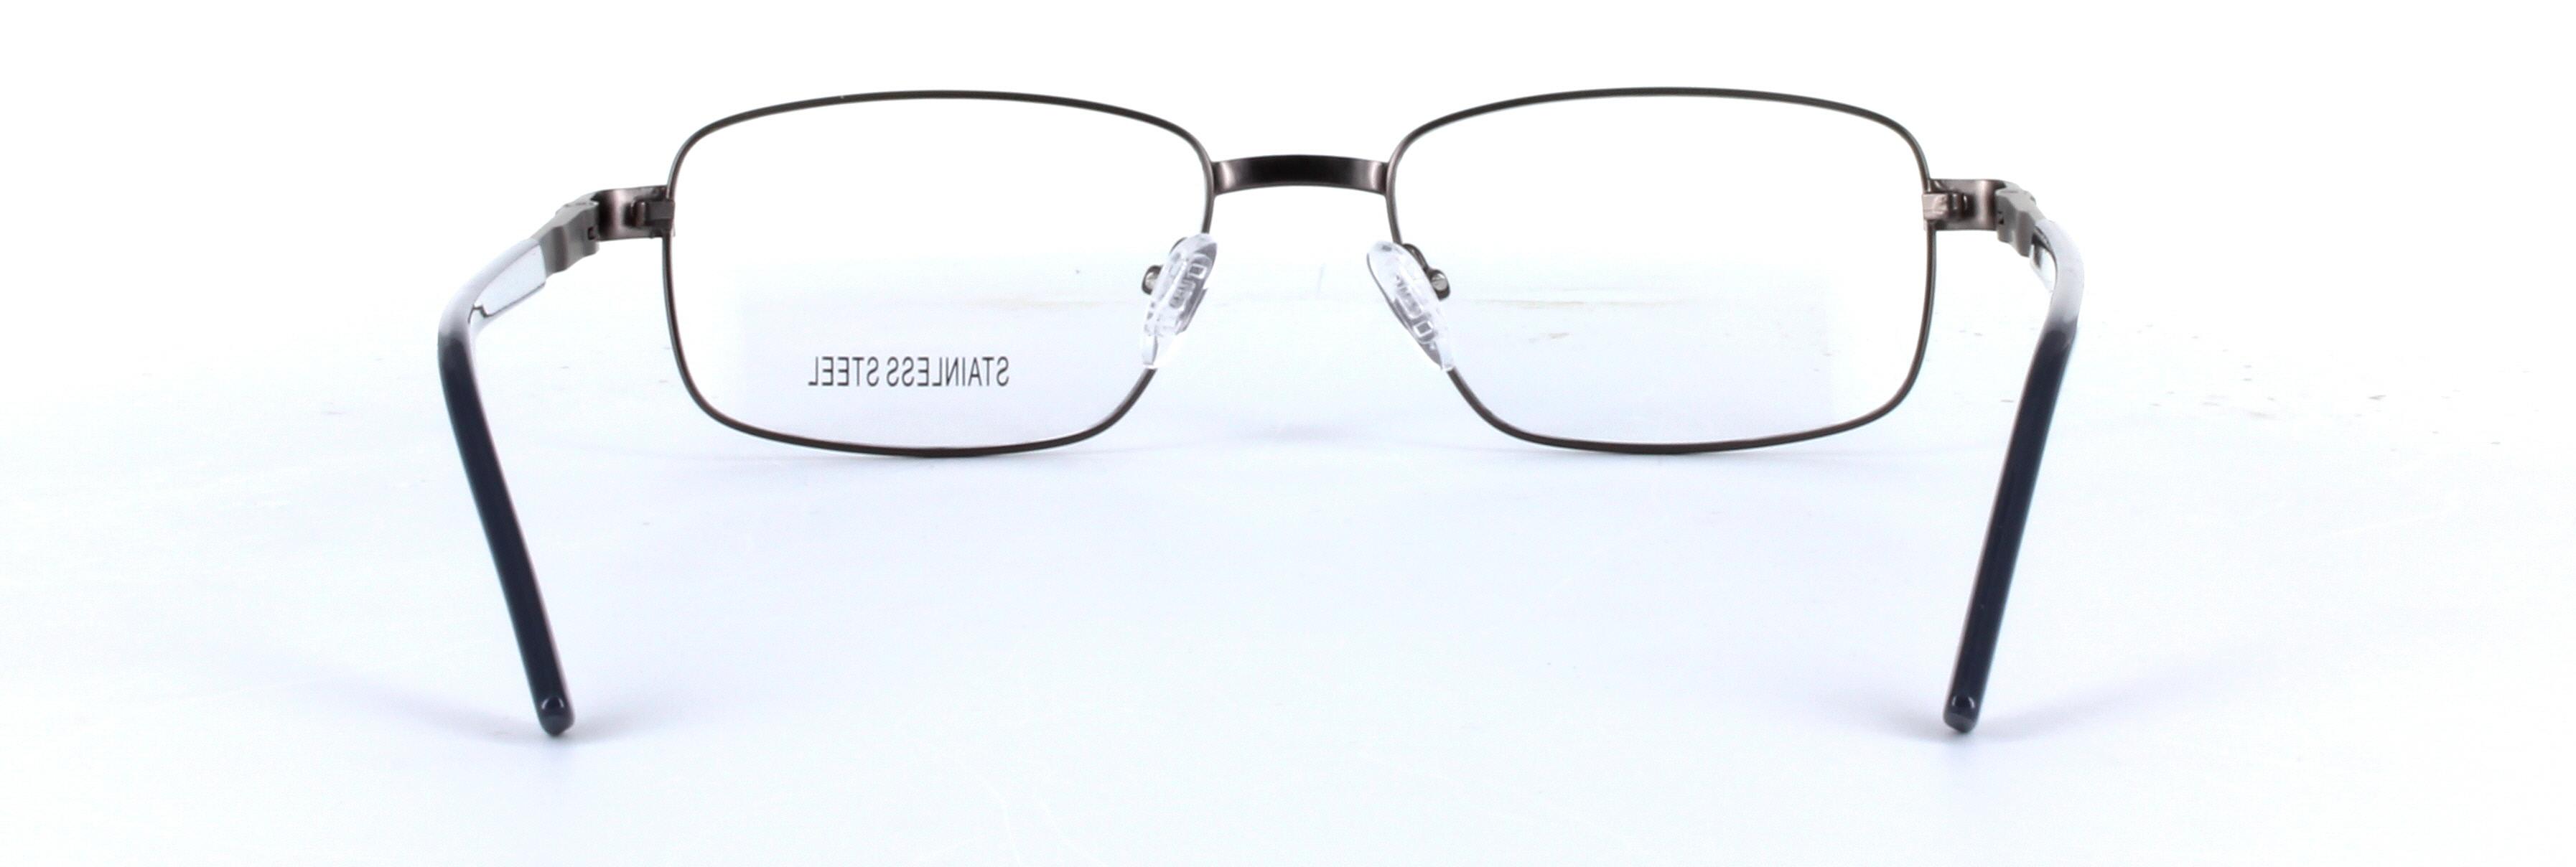 Lorenzo Bronze Full Rim Rectangular Metal Glasses - Image View 3